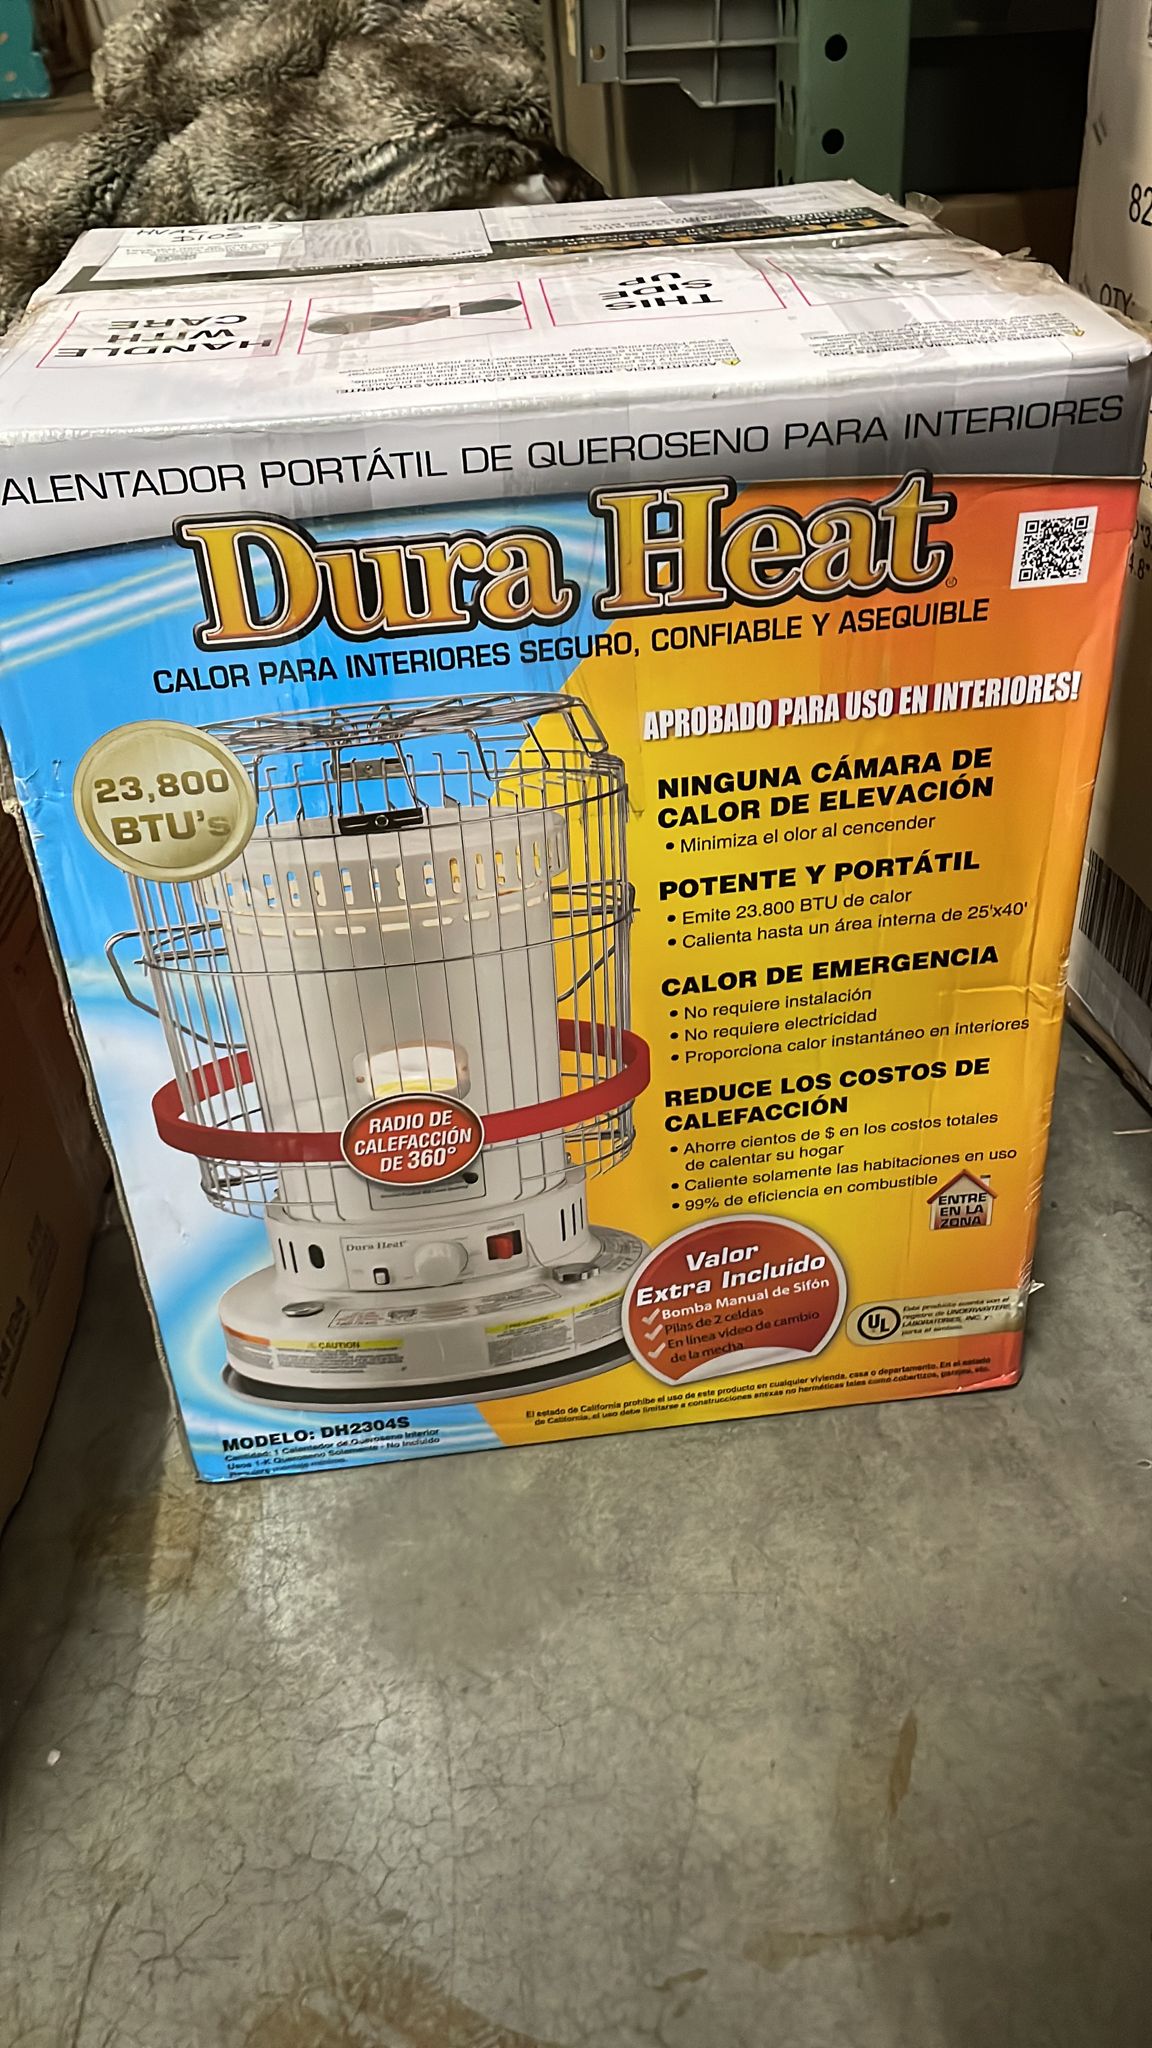 DuraHeat Portable Convection Kerosene Heater Provides 23,800 Btu's of Warmth - $105